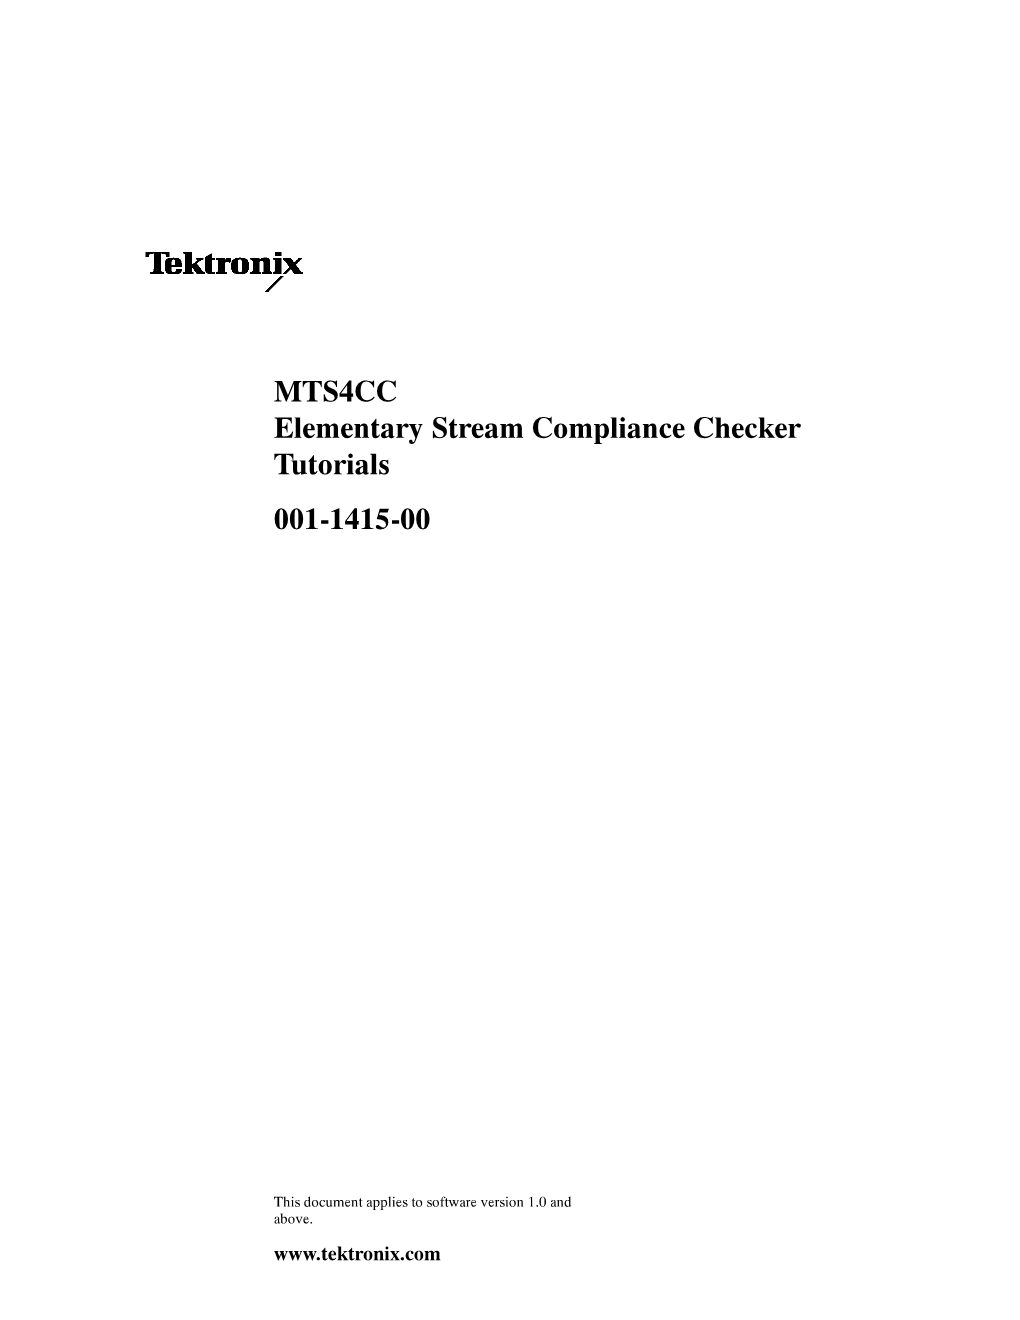 MTS4CC Elementary Stream Compliance Checker Tutorials 001-1415-00